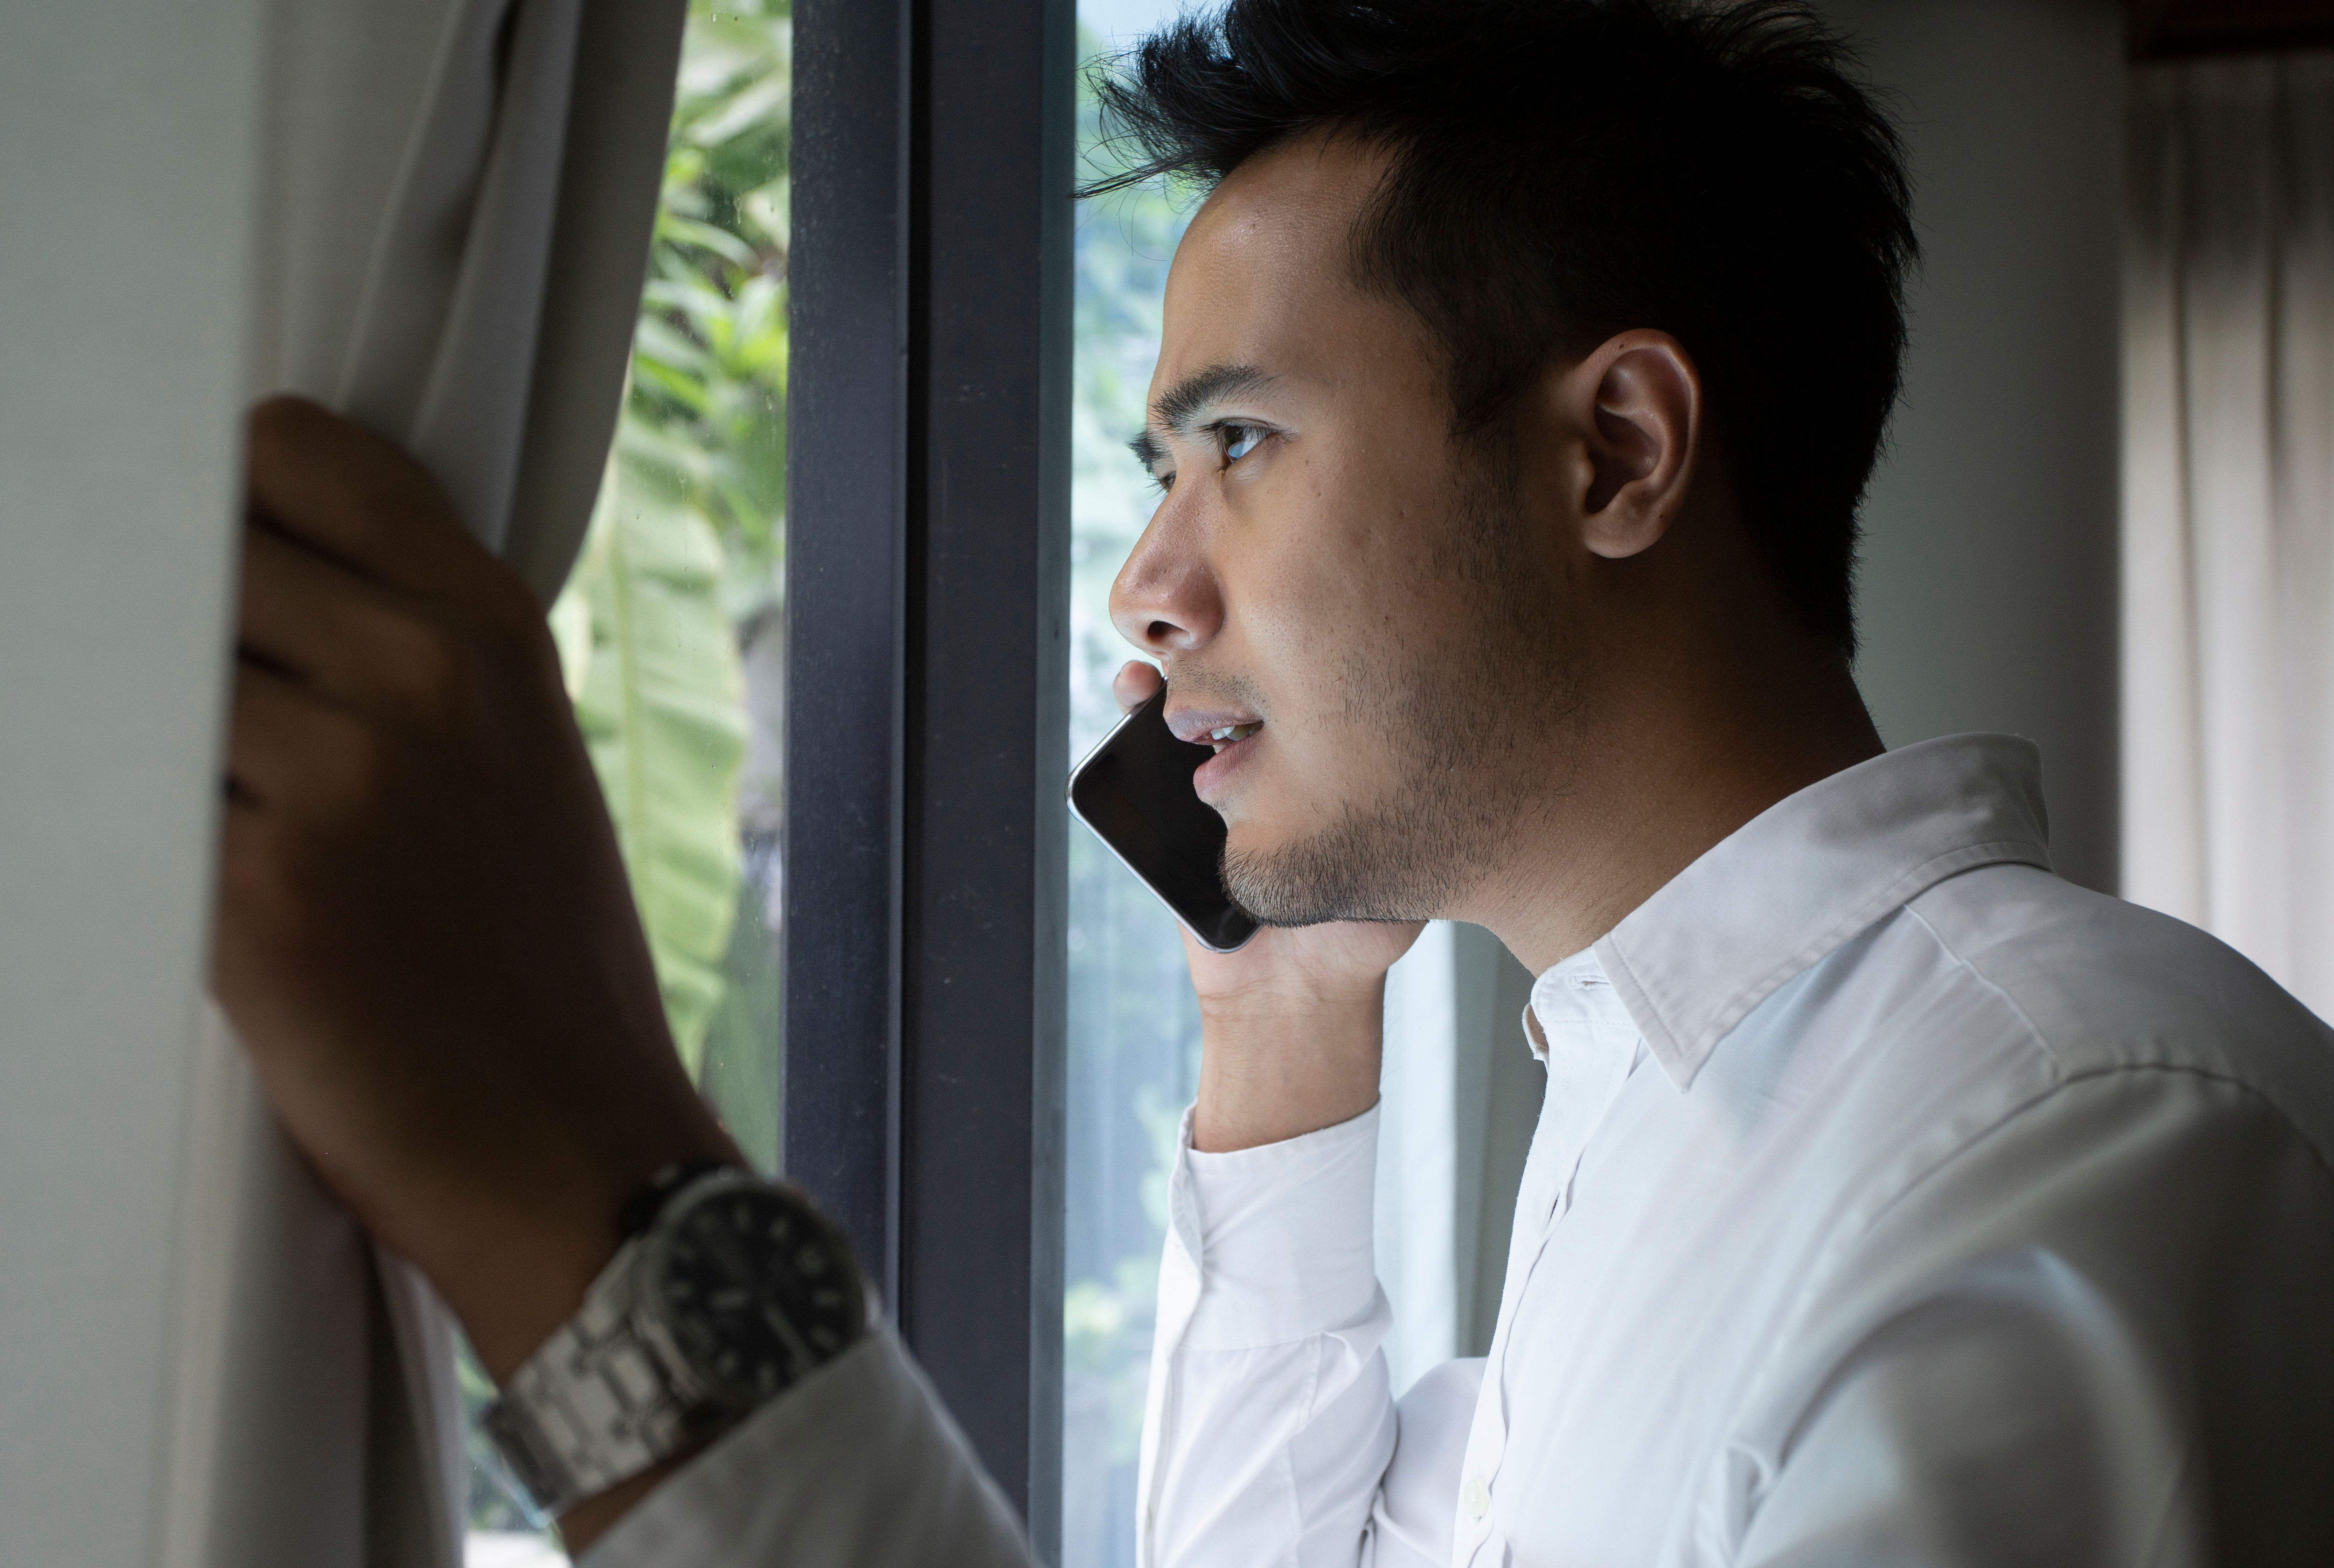 Man is talking on the phone near the window | Source: Shutterstock.com